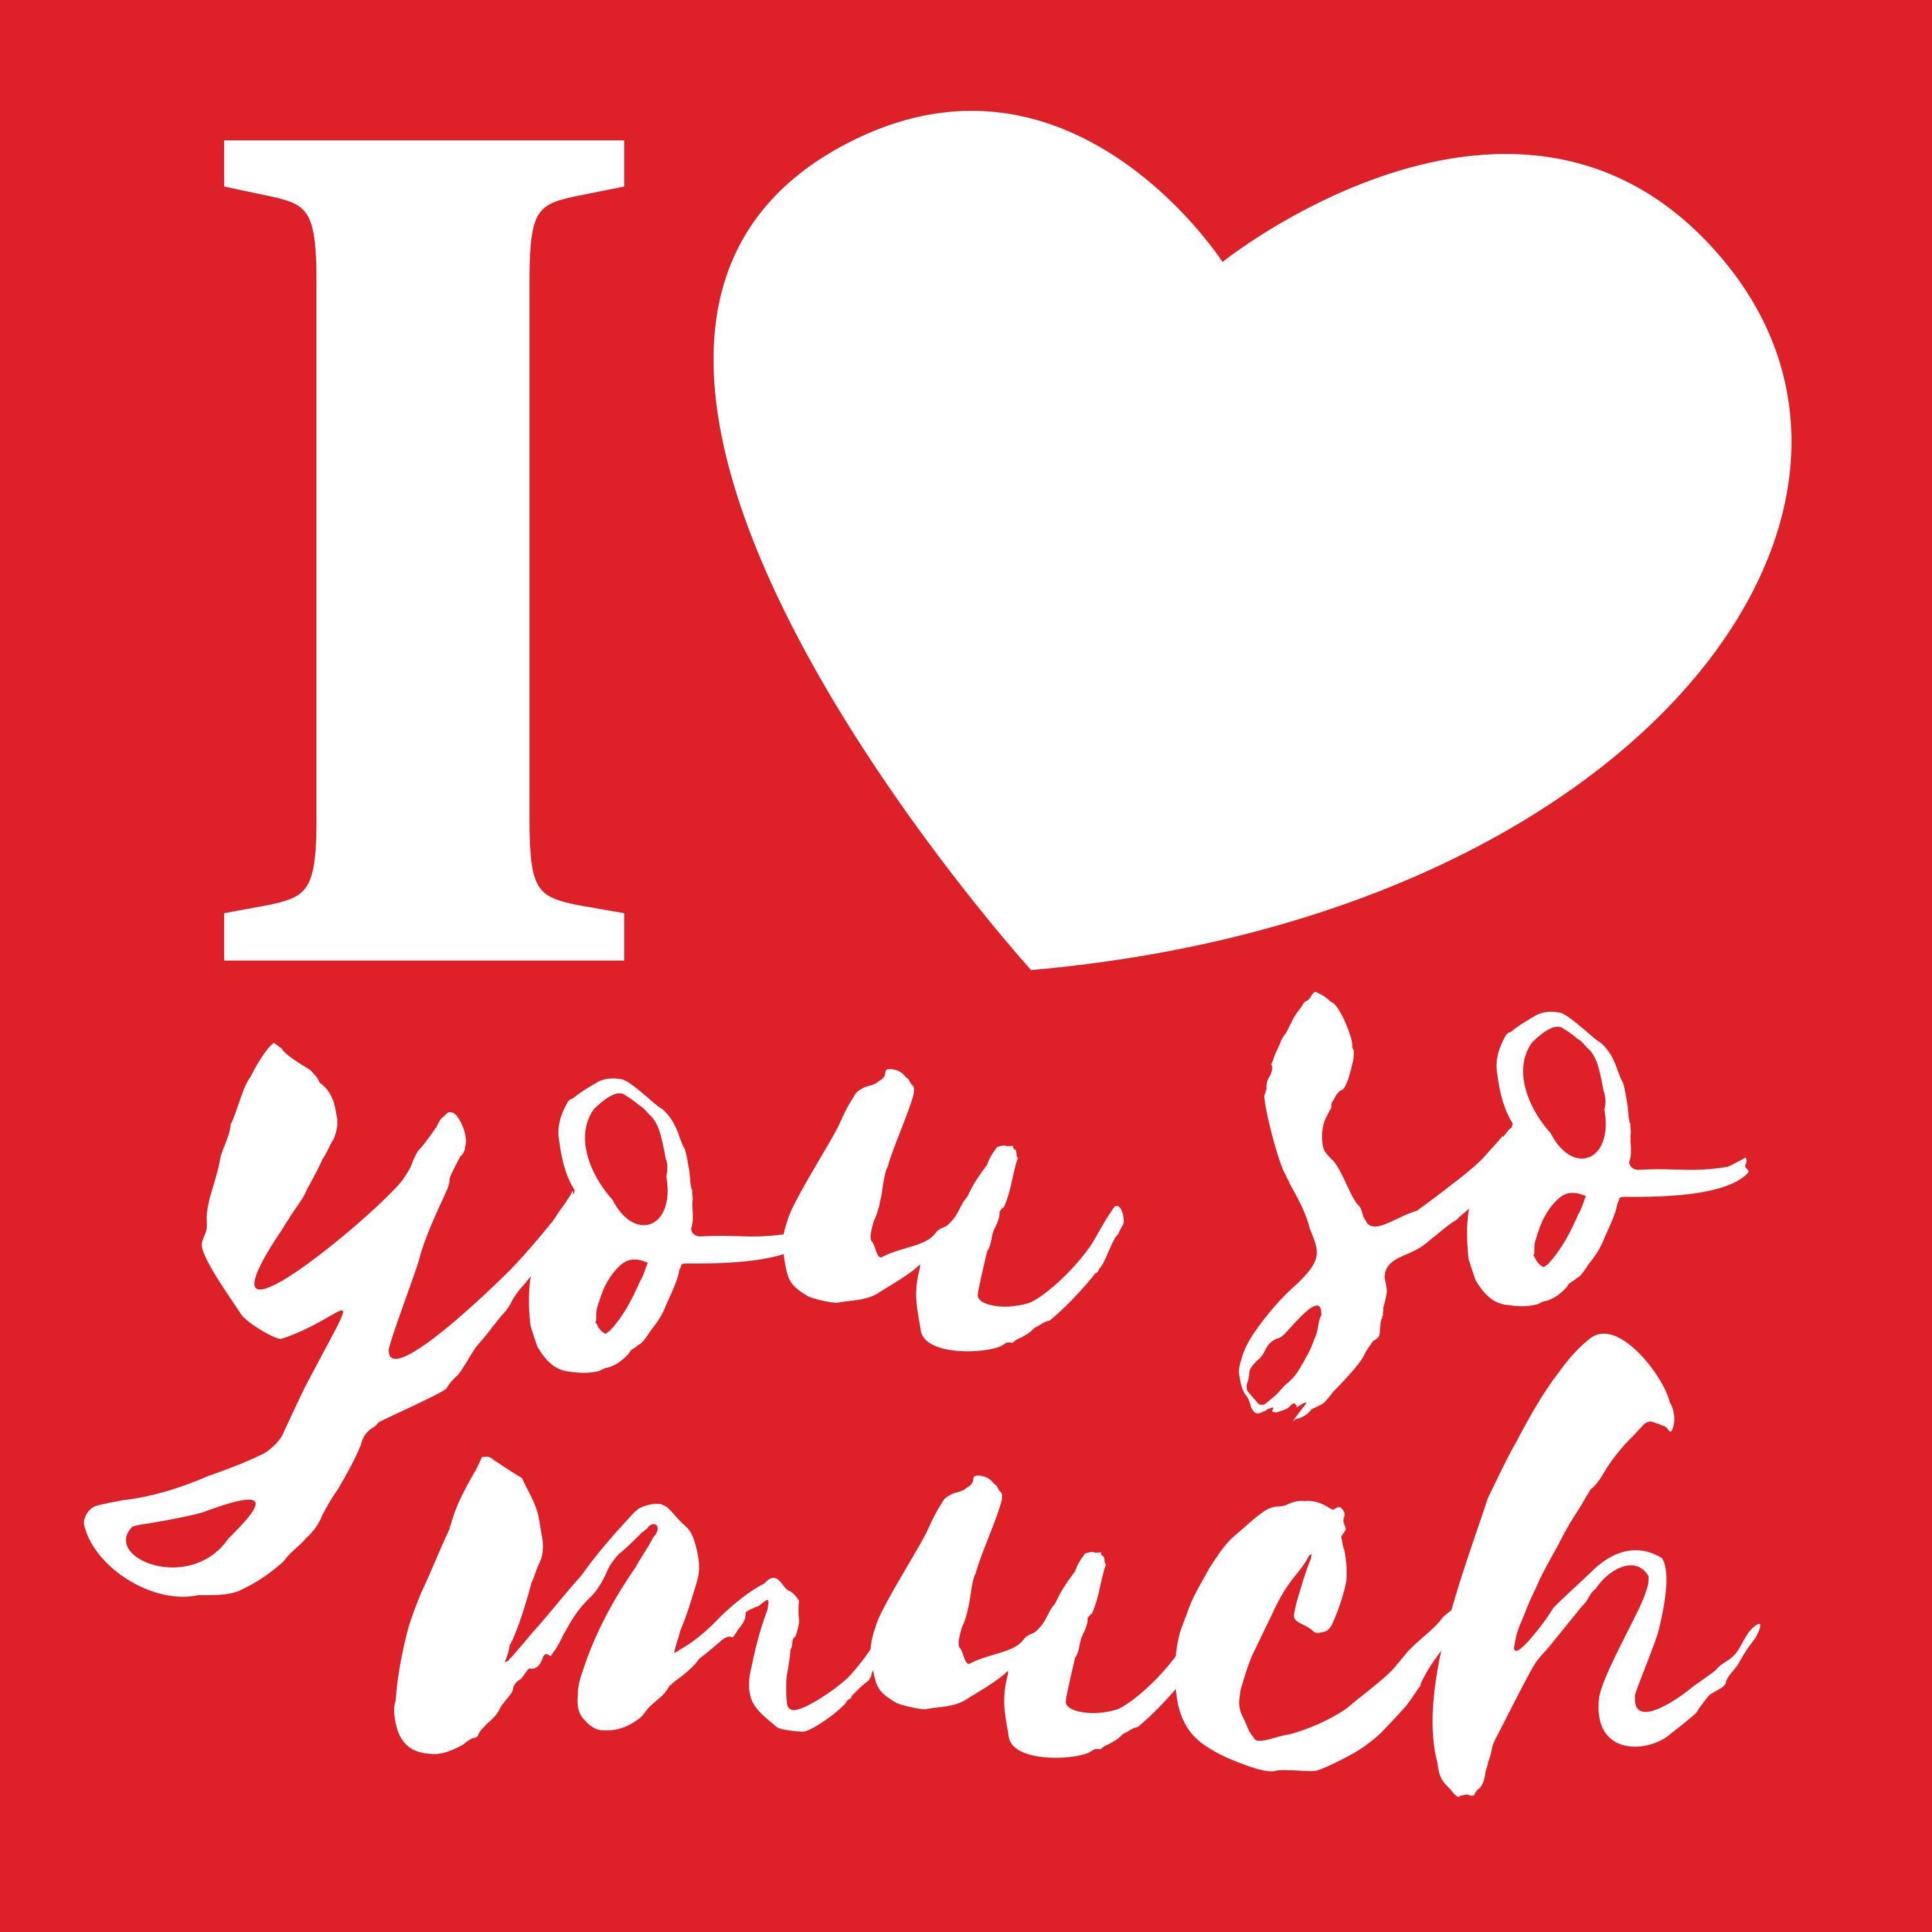 I Love U Logo - pod. fanatic. Podcast: I Love You So Much: The Austin360 Podcast